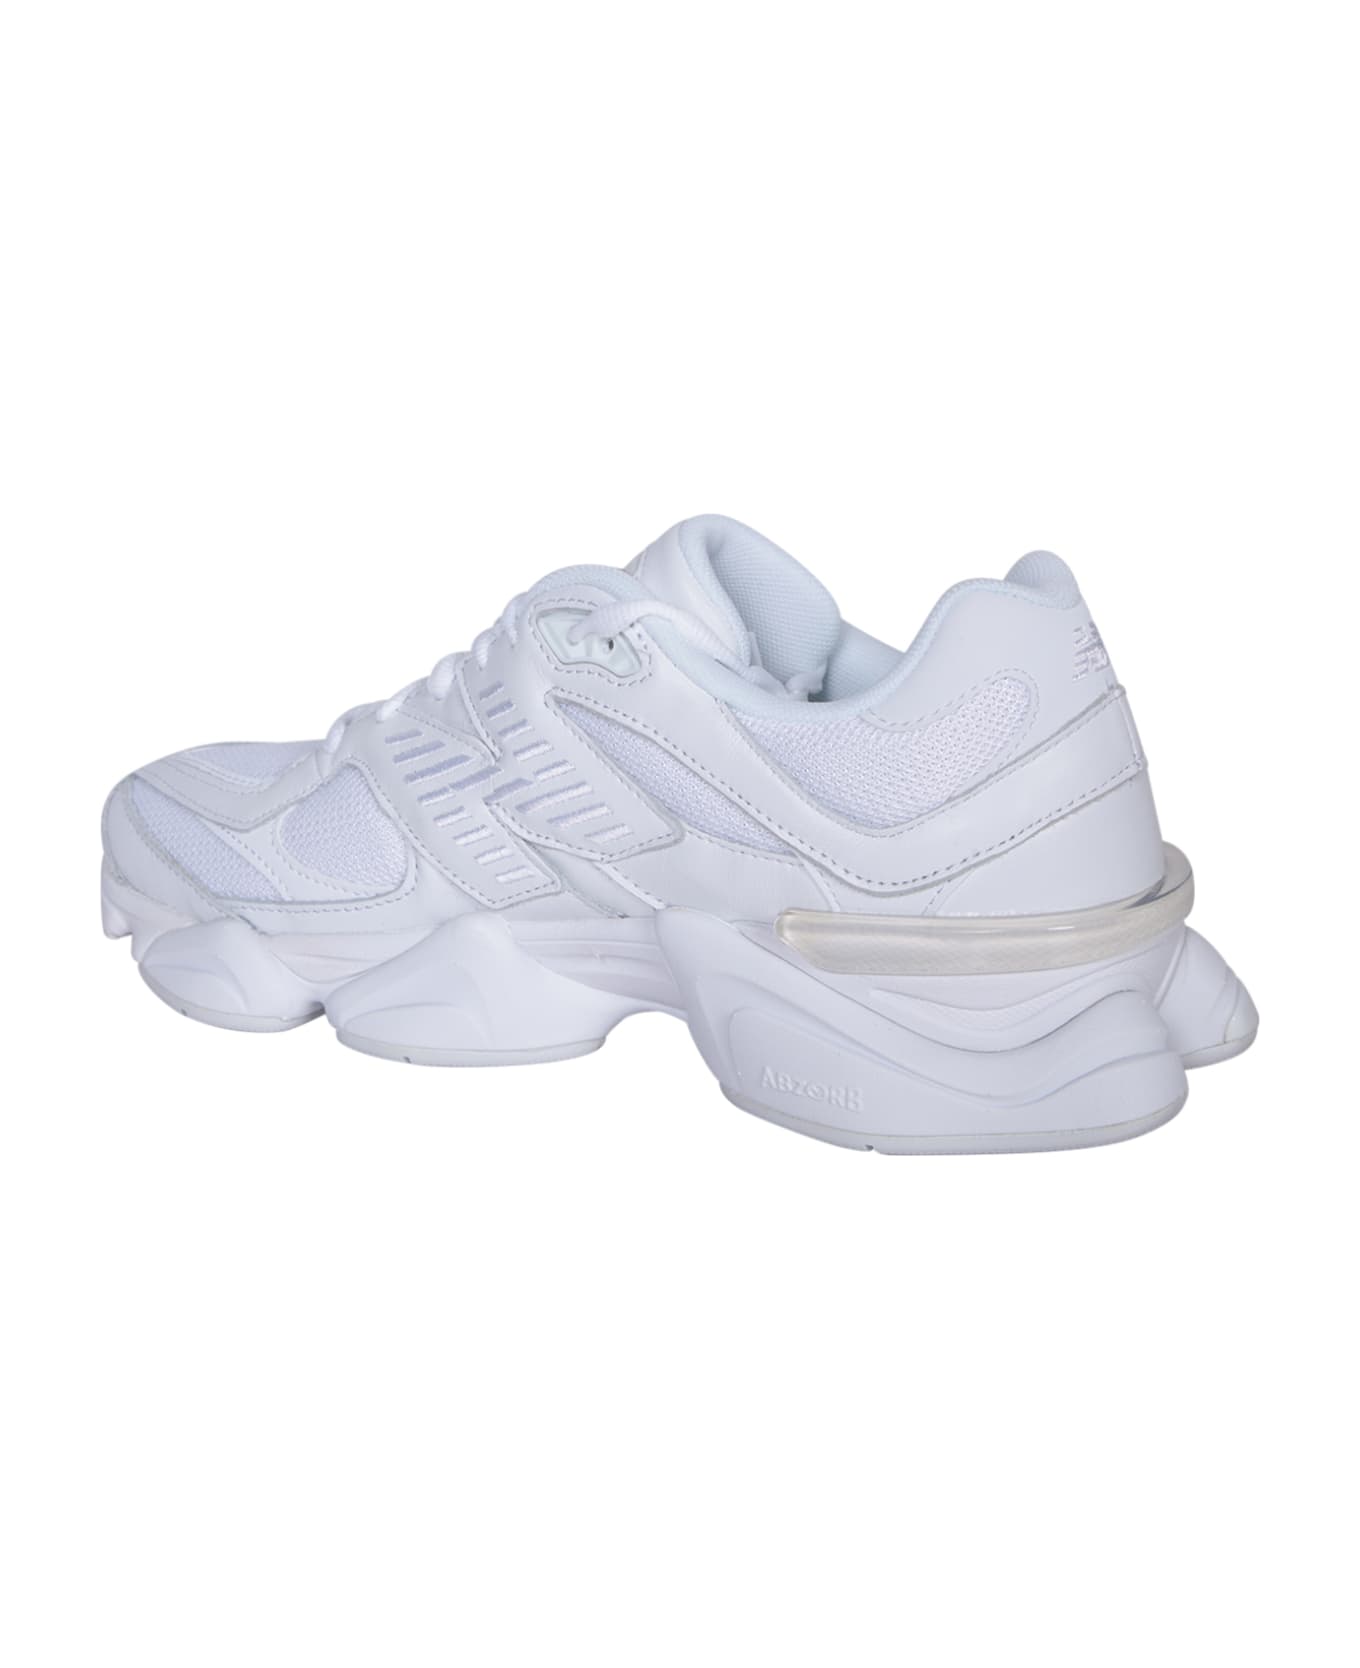 New Balance 9060 White/grey Sneakers - White